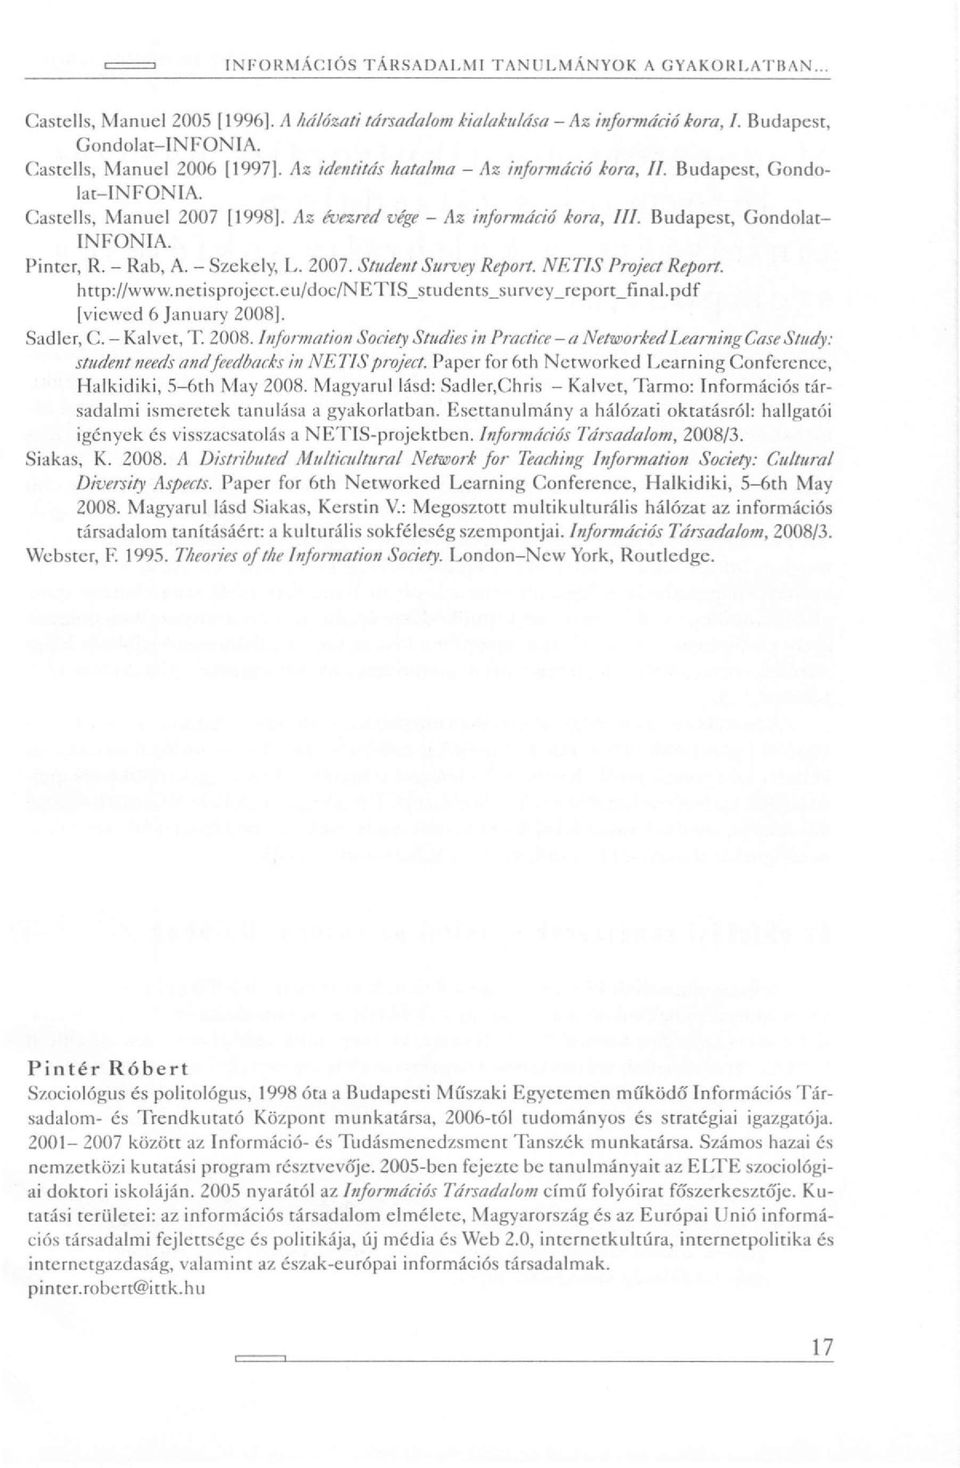 - Székely, L. 2007. Student Survey Report. NETIS Project Report. http://www.netisproject.cu/doc/netis_students_survey_rcport_final.pdf [viewed 6 January 2008]